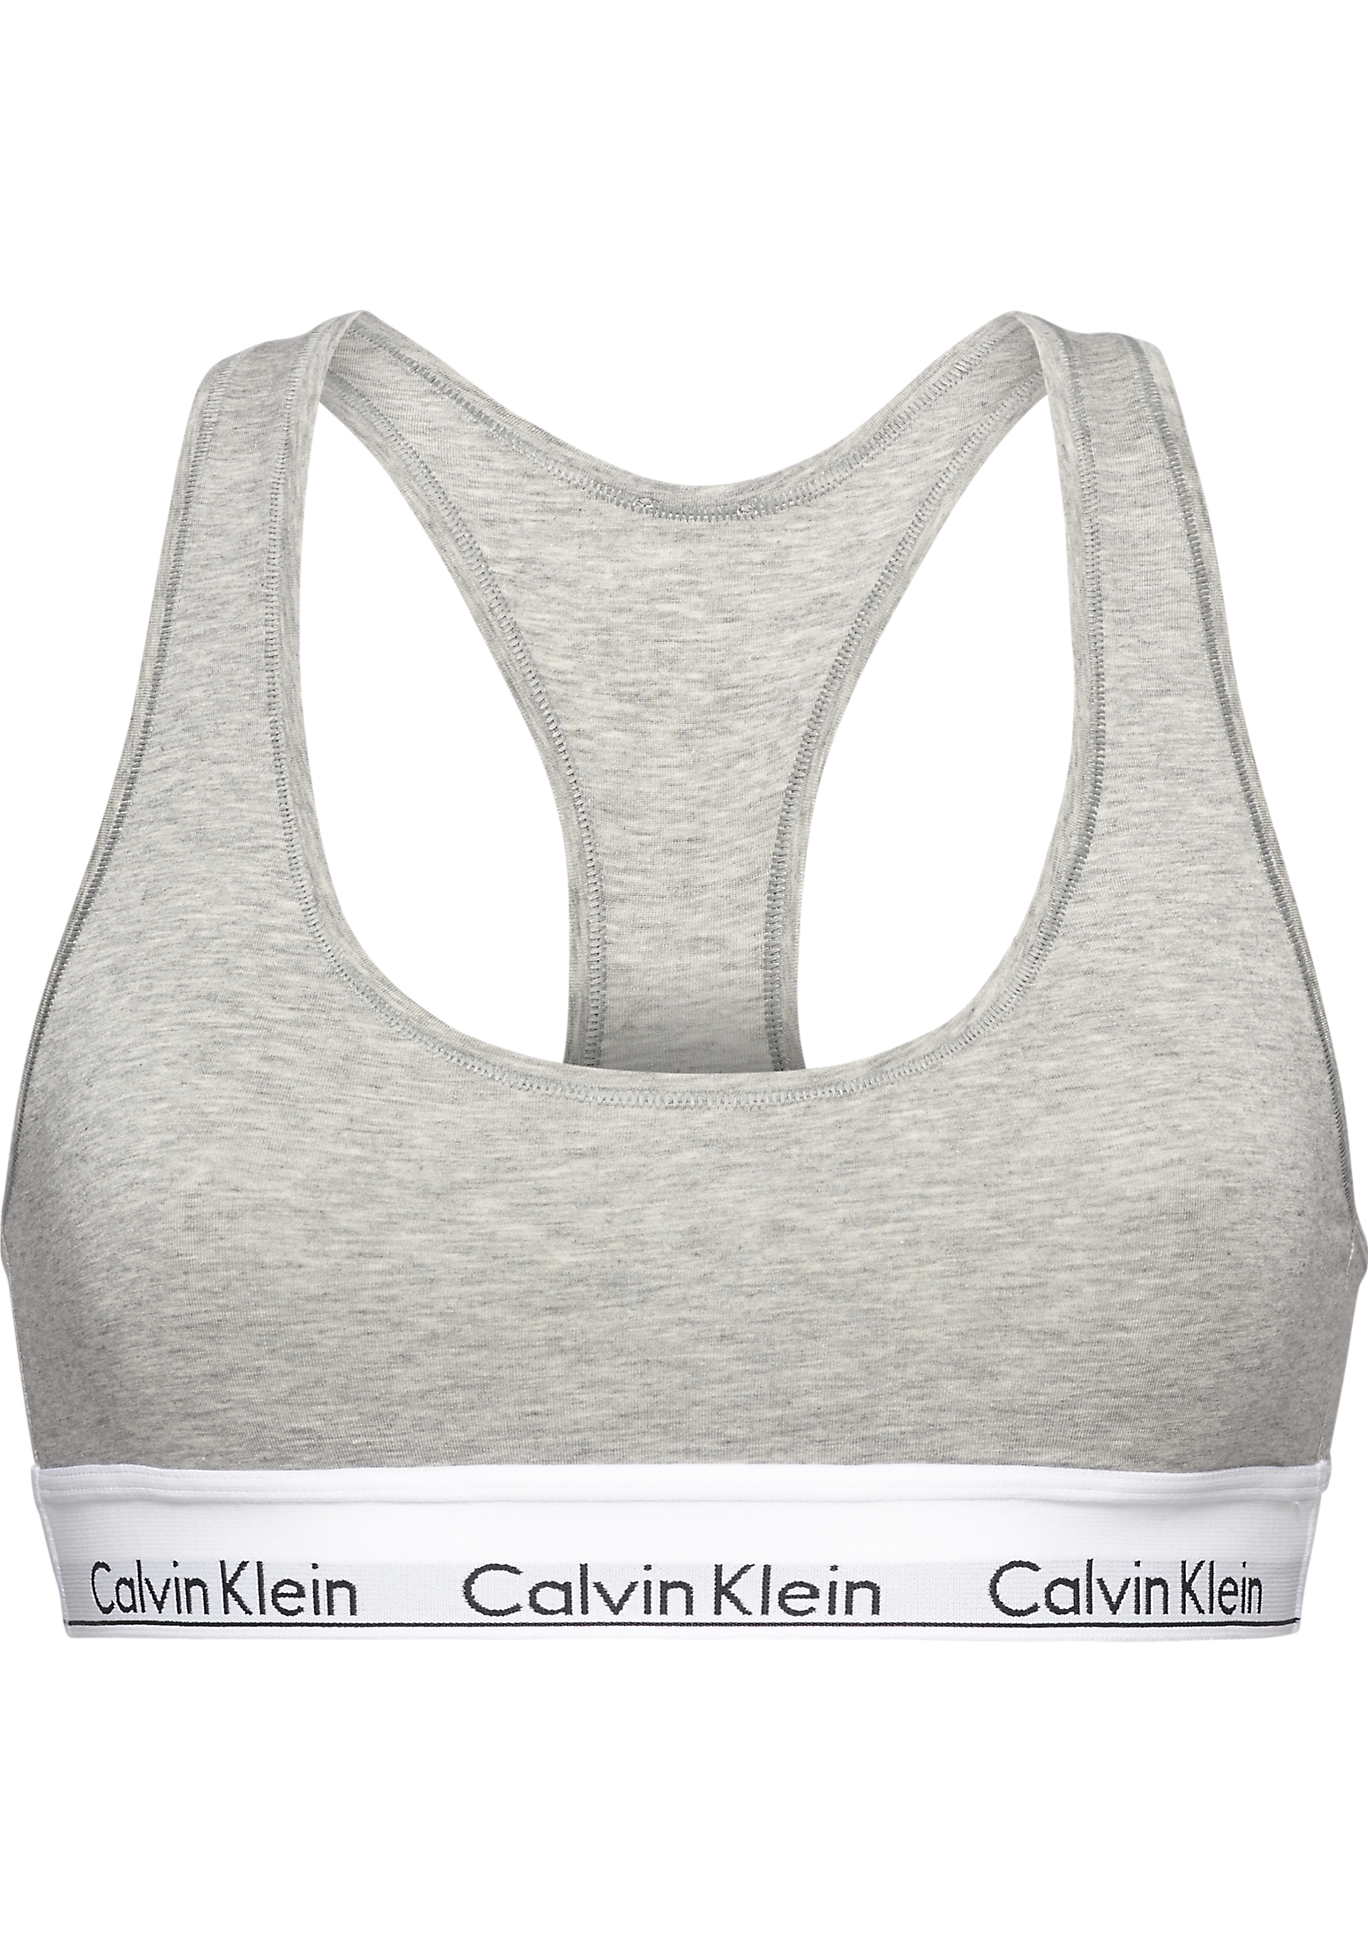 Nutteloos Te voet Bediening mogelijk Calvin Klein dames Modern Cotton bralette top, ongevoerd, grijs - Zomer SALE  tot 50% korting